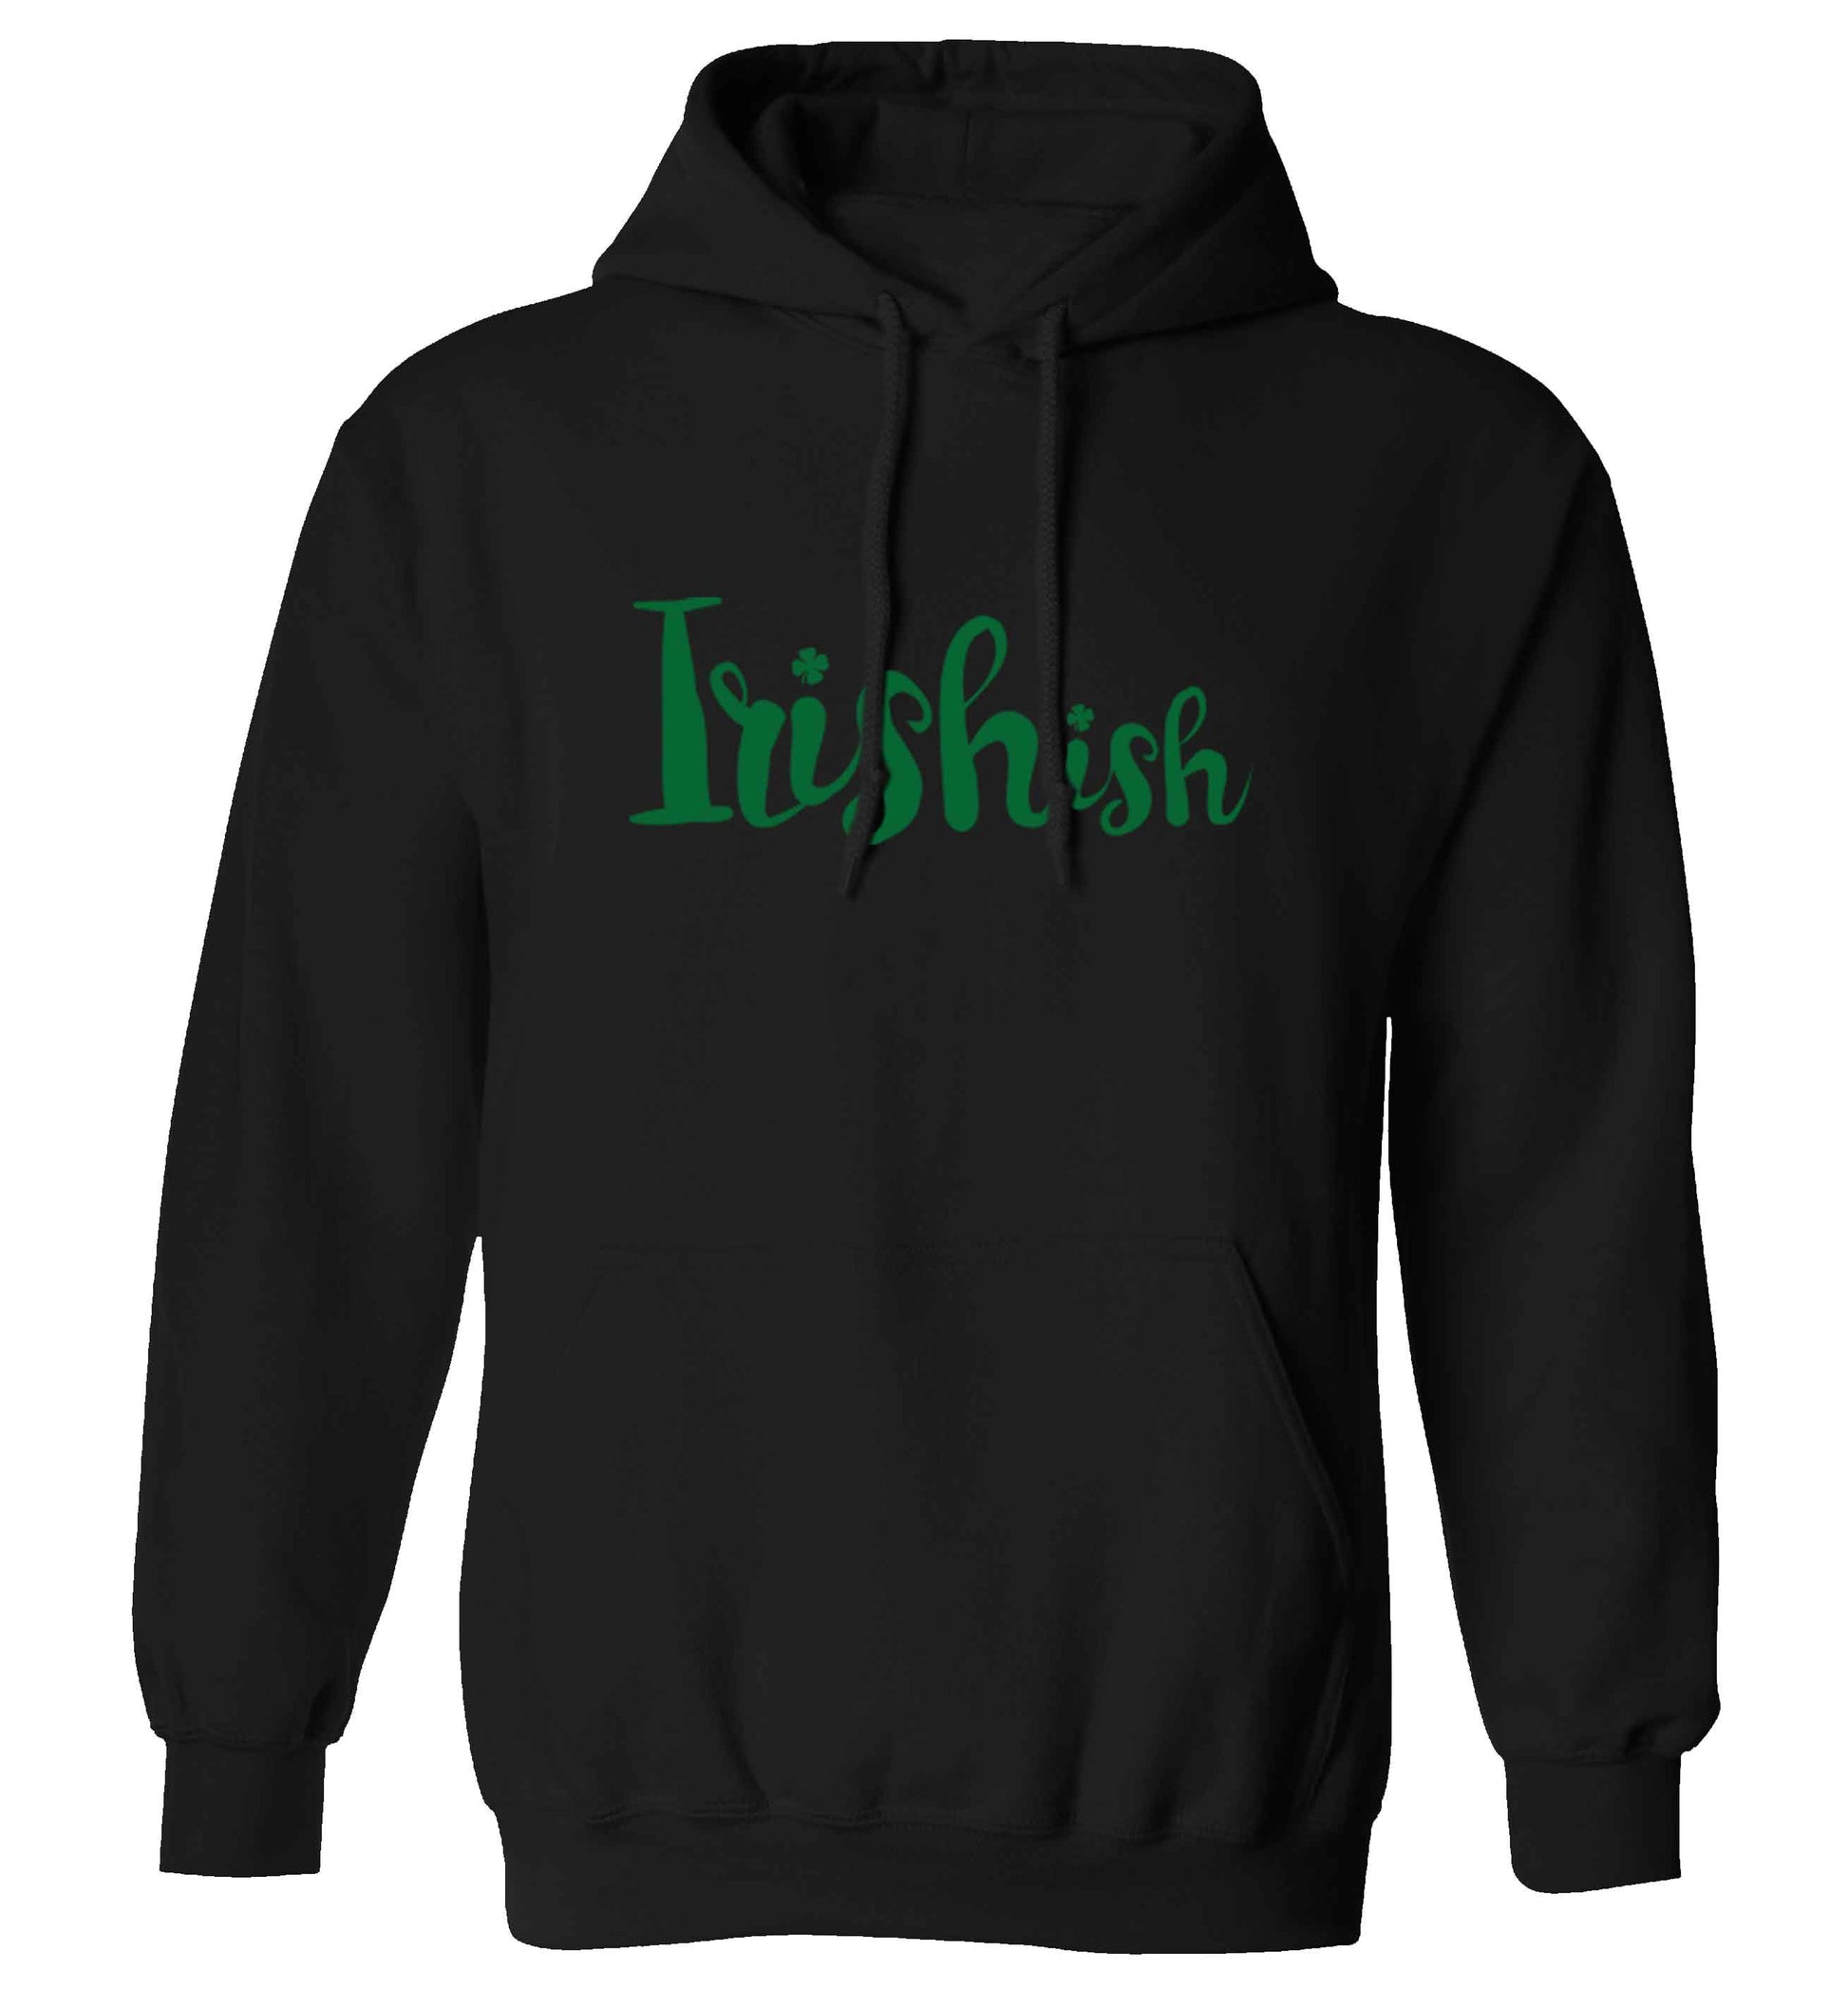 Irishish adults unisex black hoodie 2XL